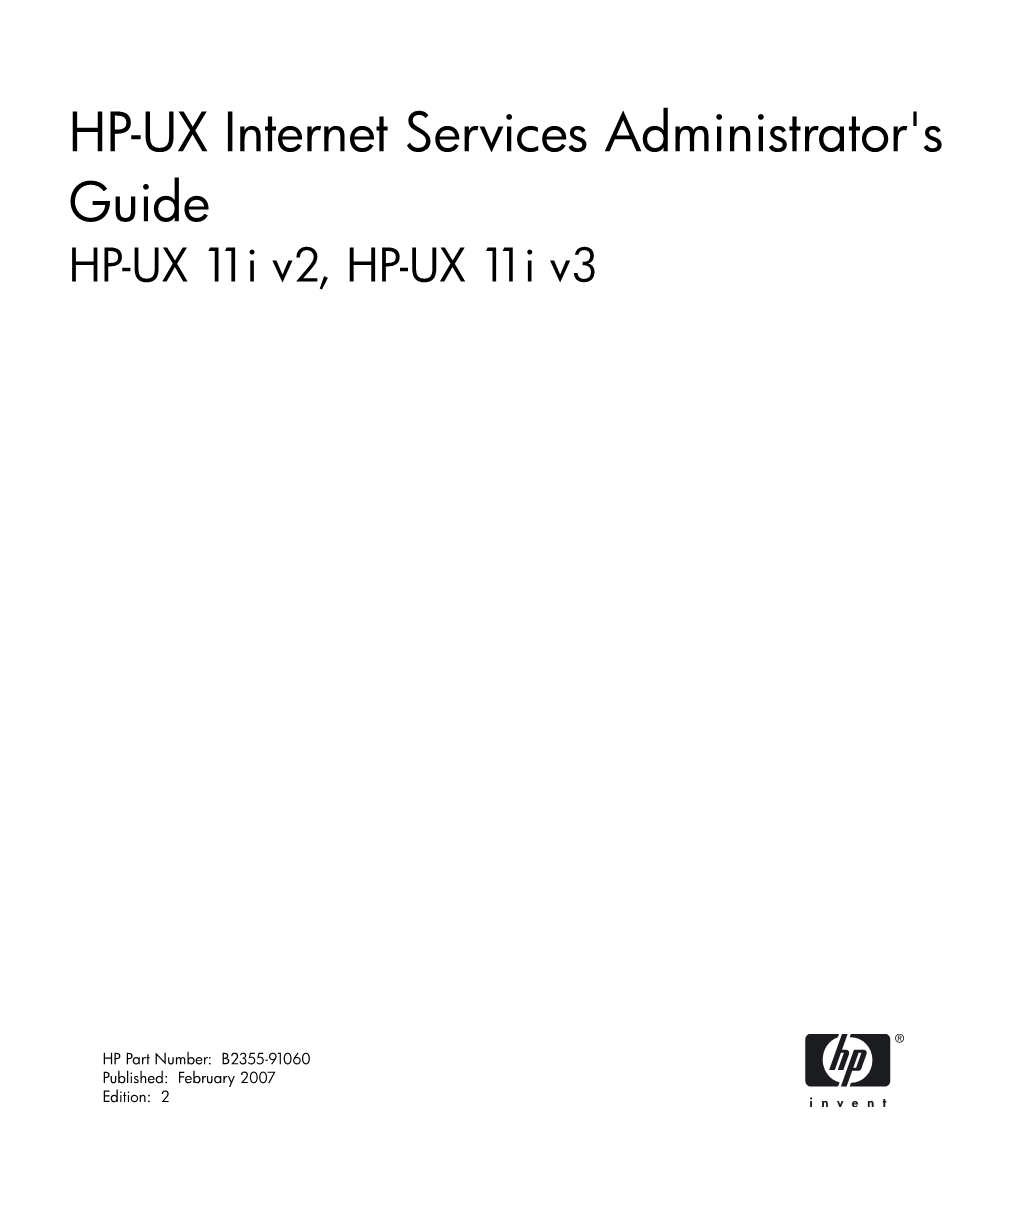 HP-UX Internet Services Administrator's Guide HP-UX 11I V2, HP-UX 11I V3